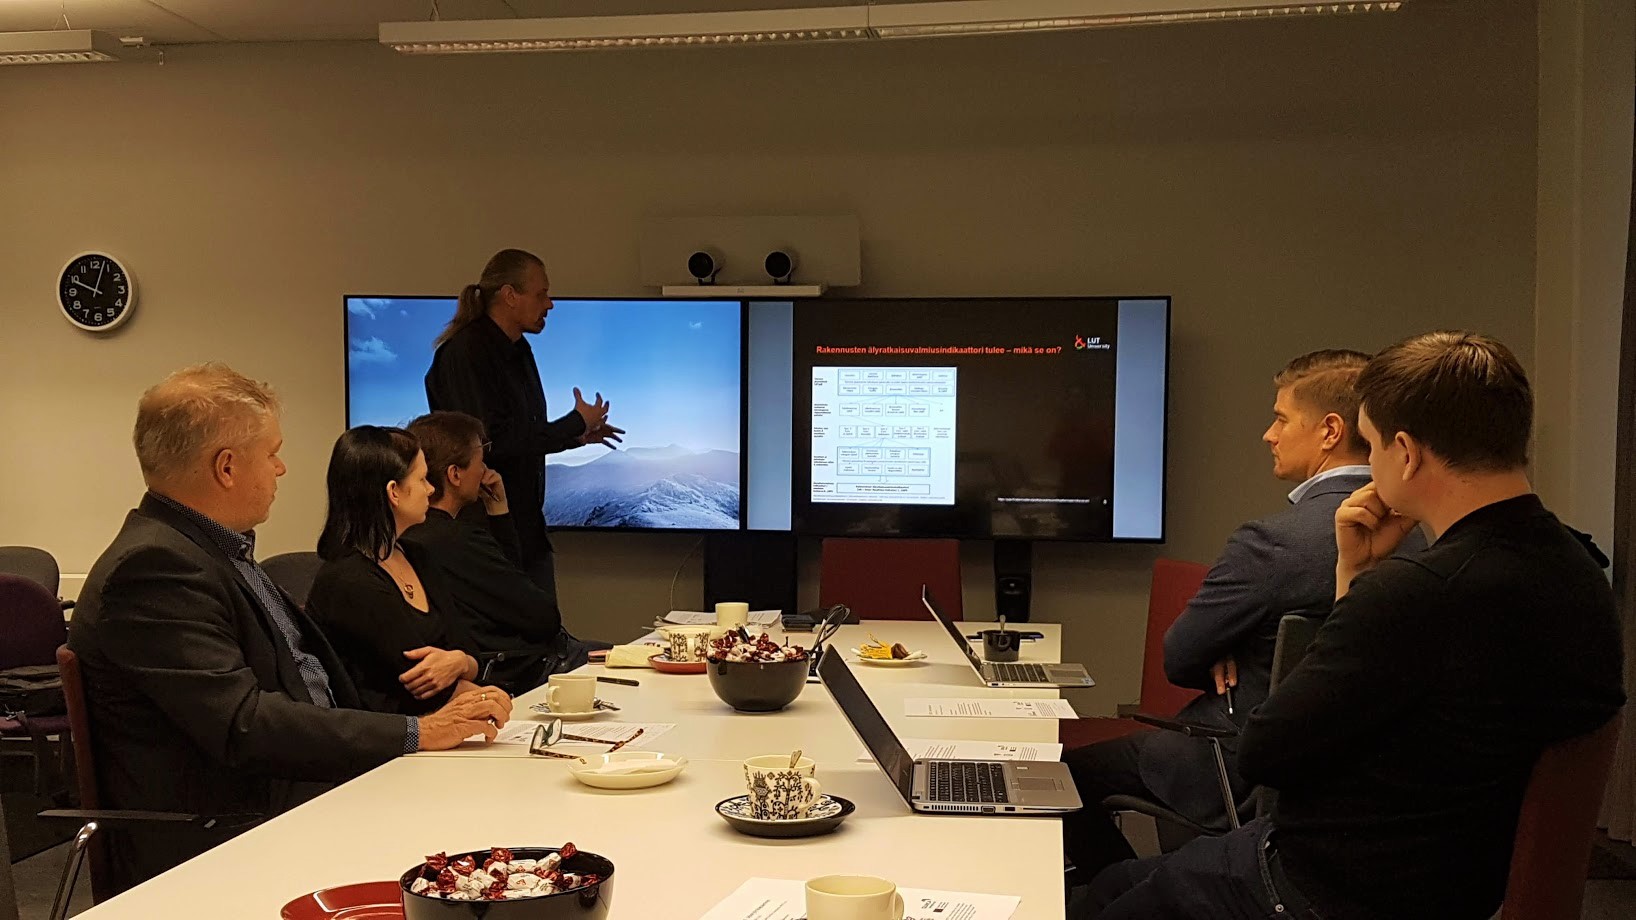 South Karelia & LUT opened stakeholder meetings time